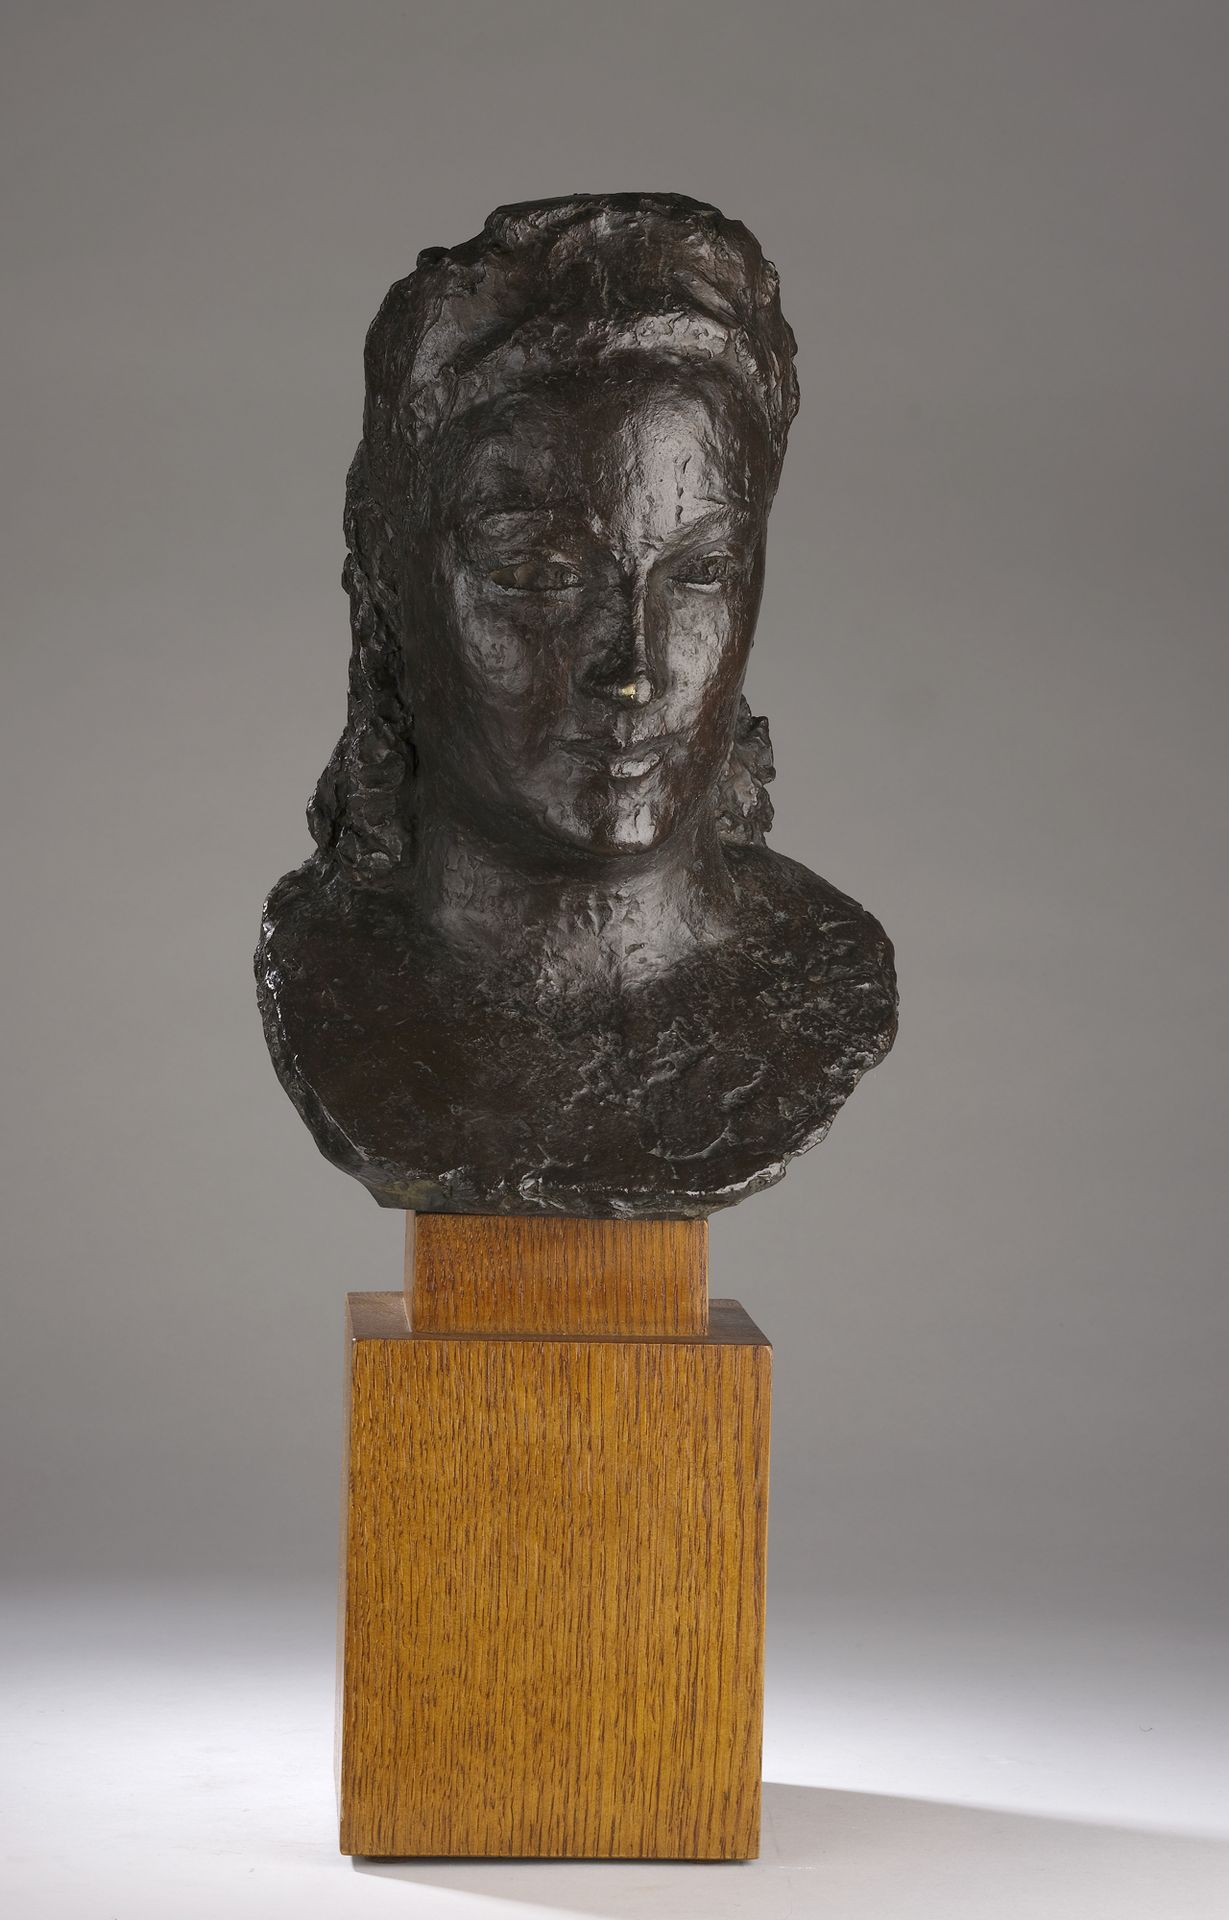 Null 让-奥苏夫 (1898-1996)

妇女半身像

青铜，带有棕色的铜锈。

签名：J. OSOUF。

编号为1/8，带有创始人的印章CIRE PE&hellip;